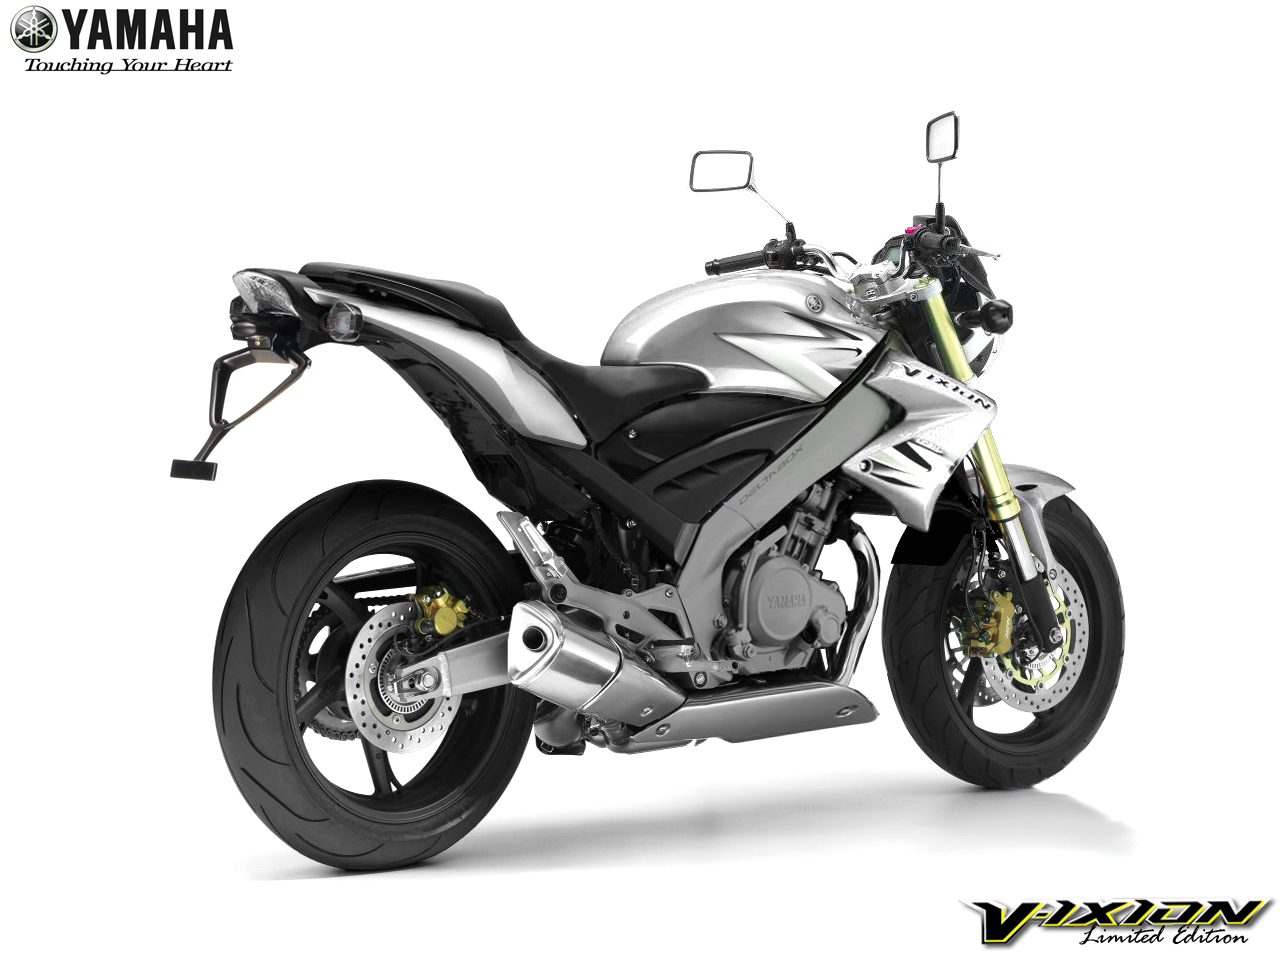 Foto Modifikasi Motor Yamaha Mx